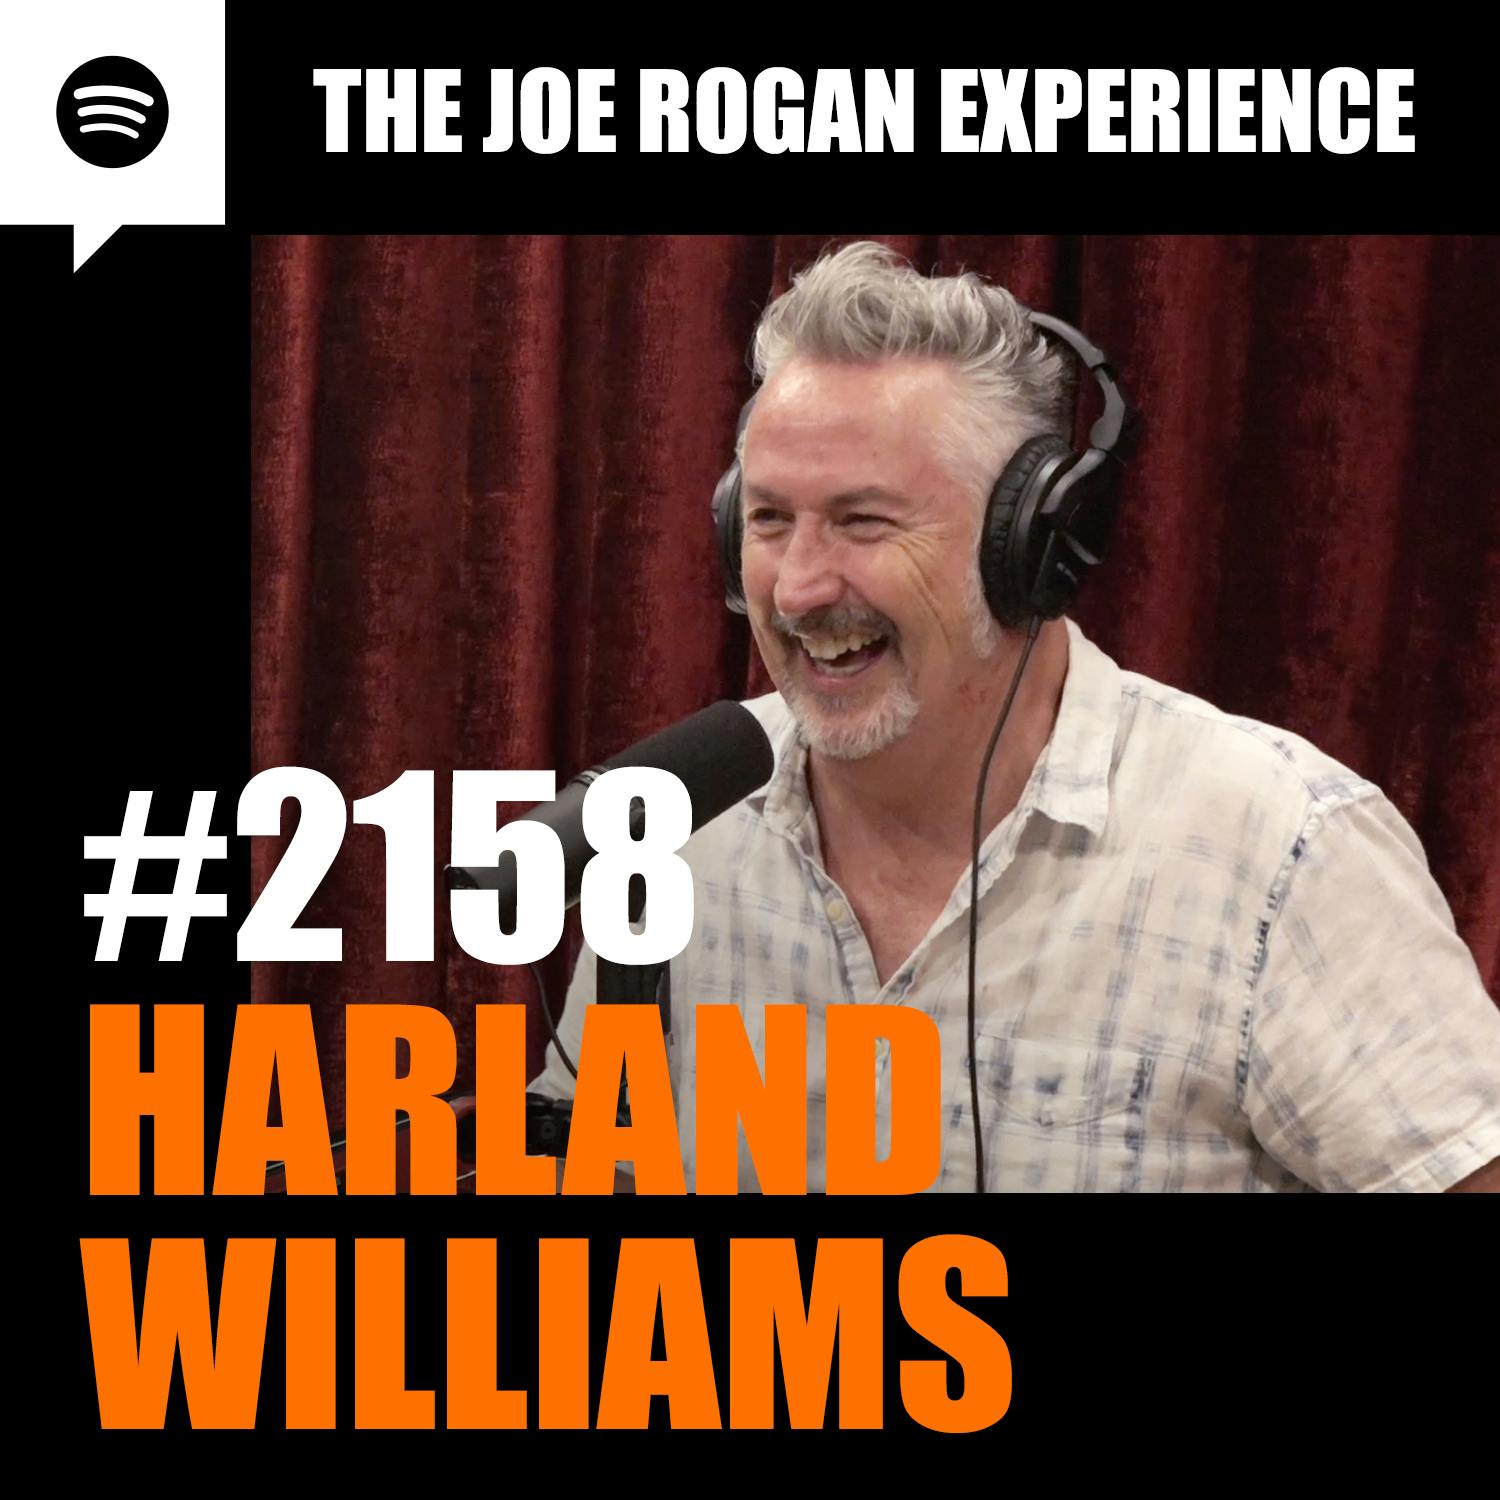 #2158 - Harland Williams